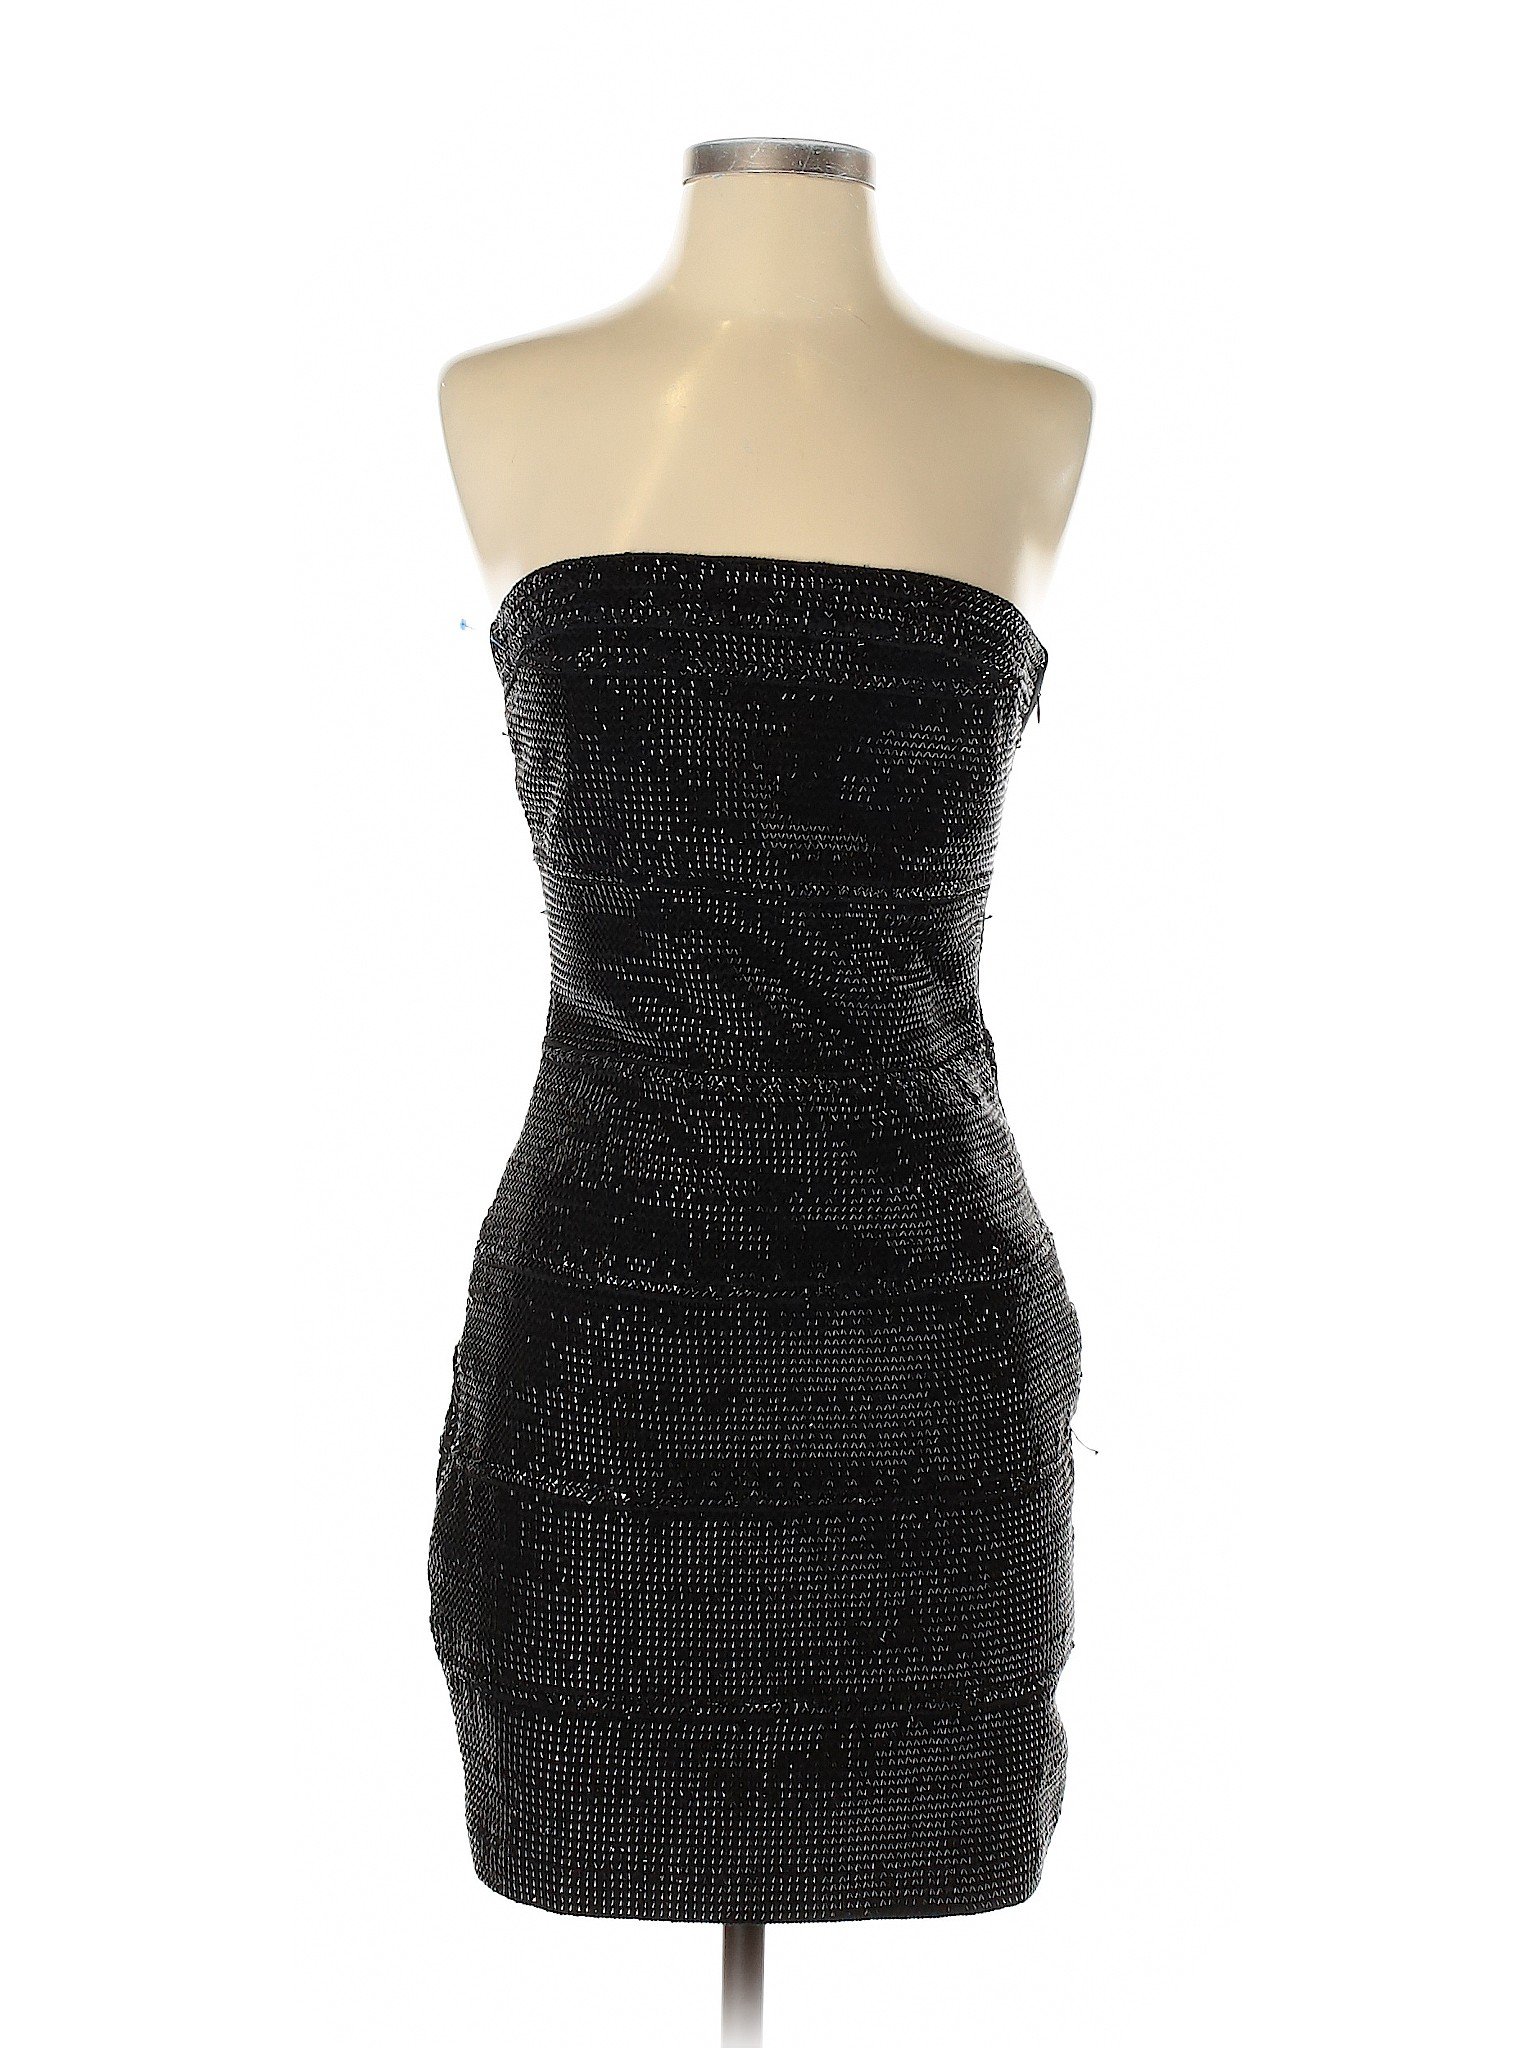 Wow Couture Women Black Cocktail Dress M | eBay